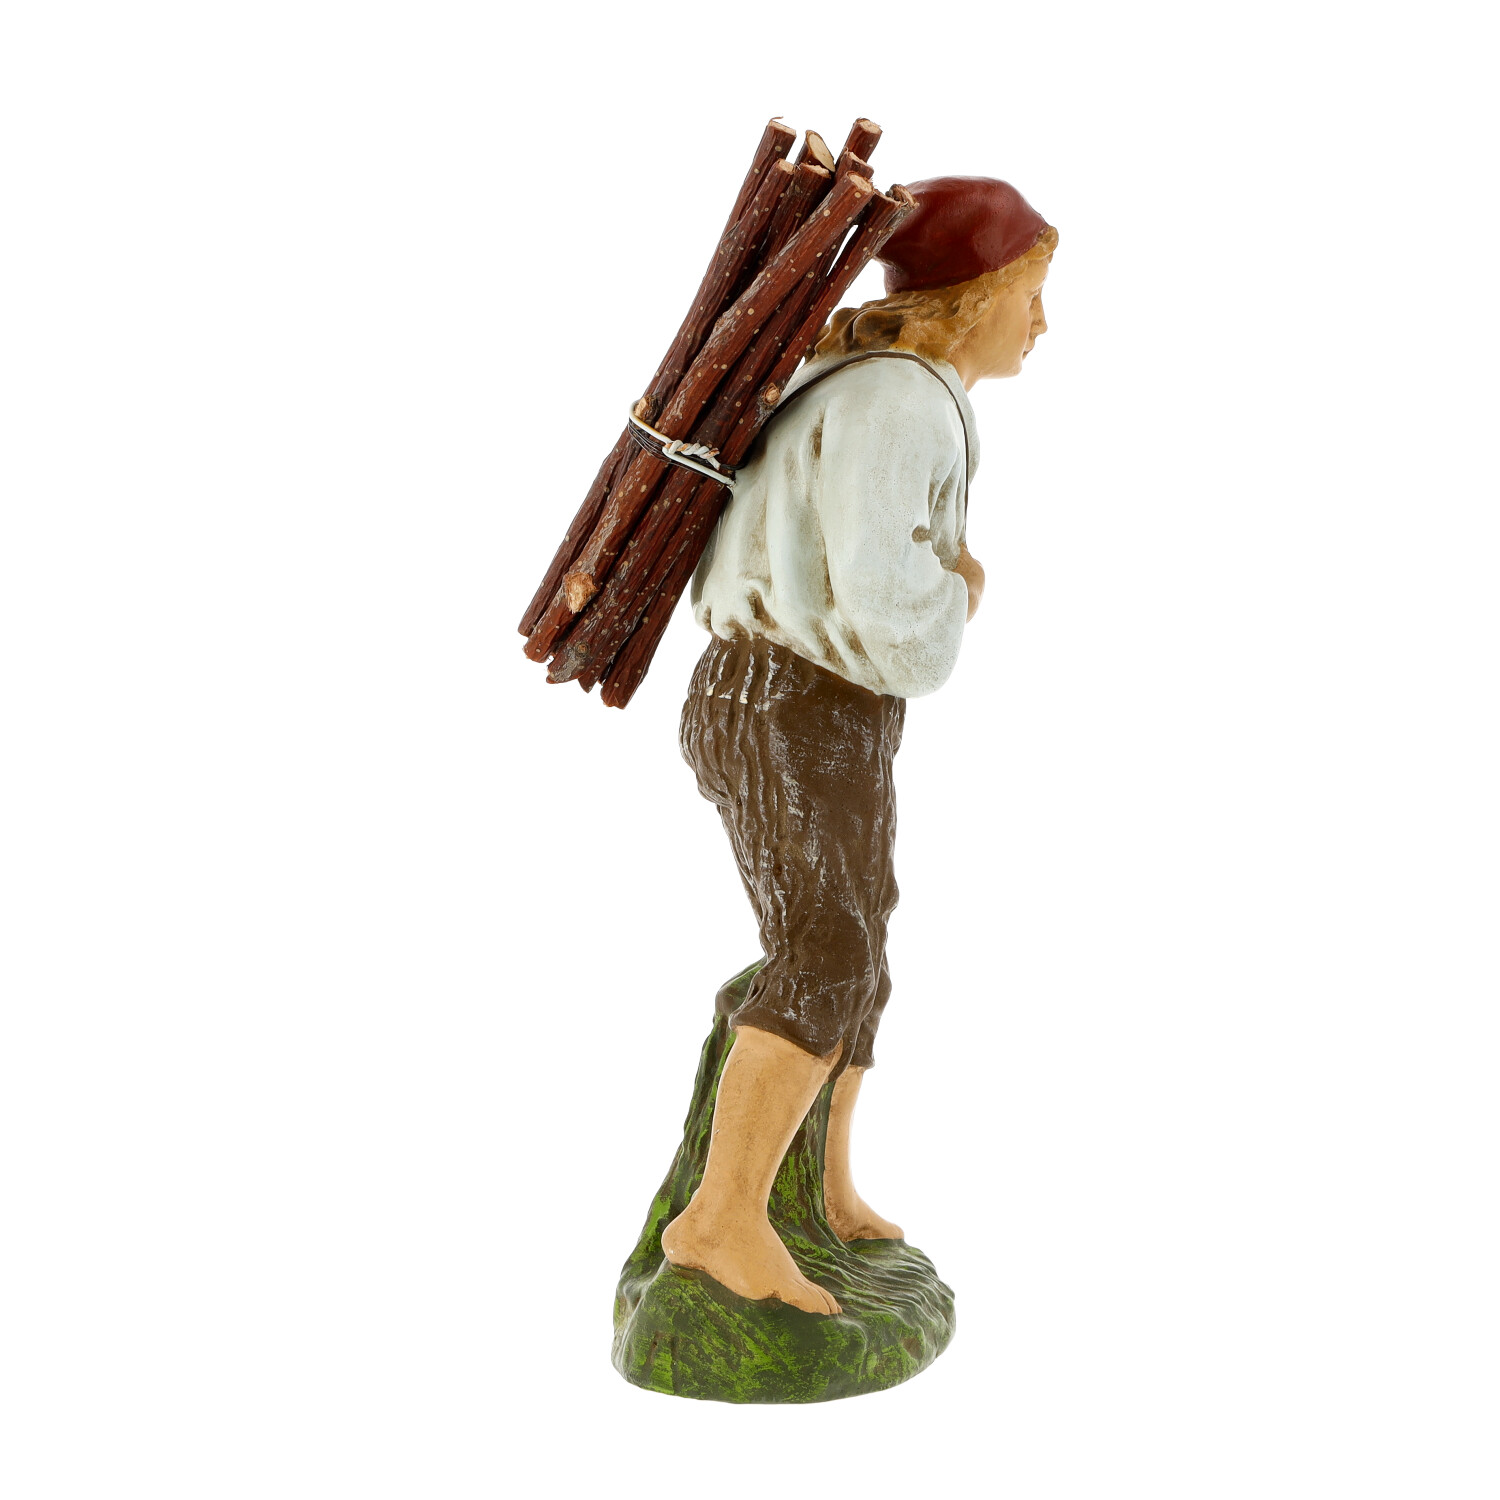 Shepherd with timber - Marolin Nativity figure - made in Germany